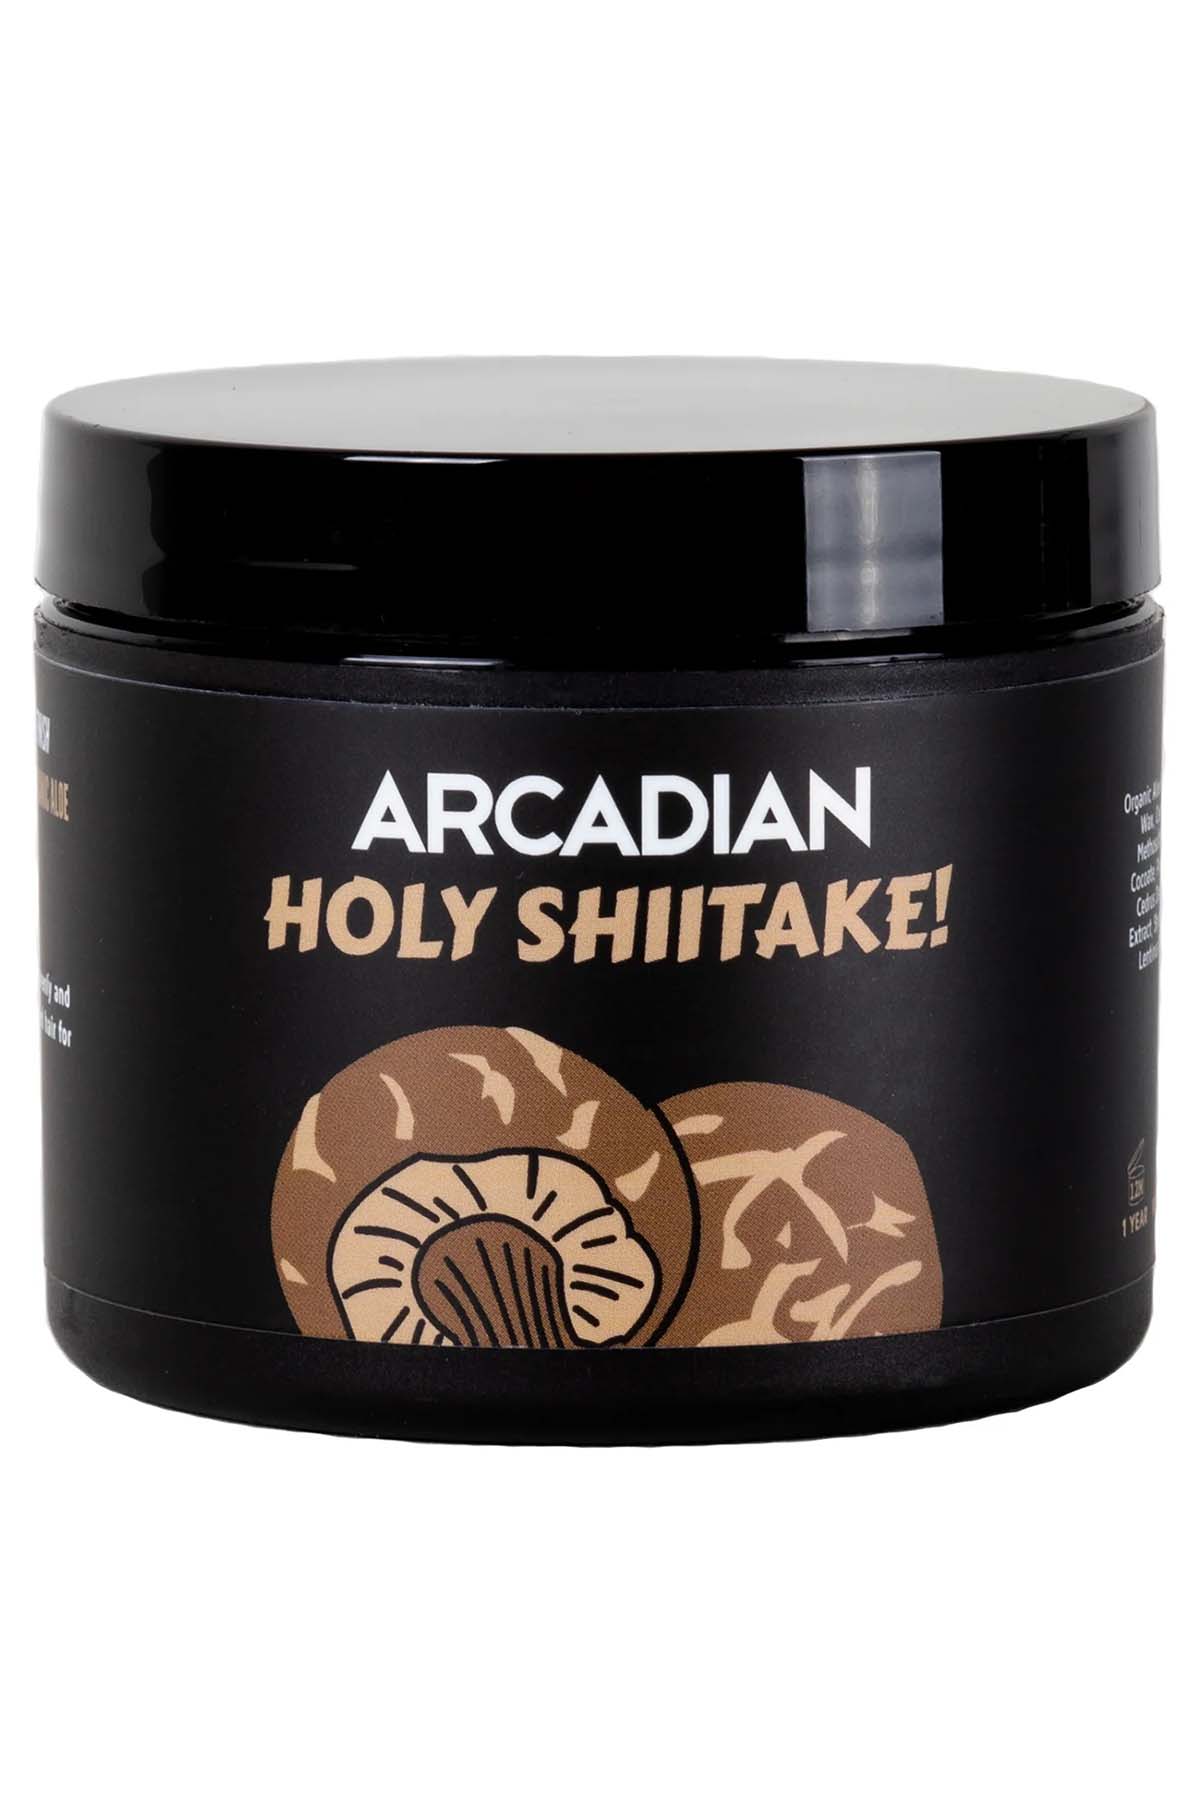 Arcadian Holy Shiitake! Texture Cream 4oz